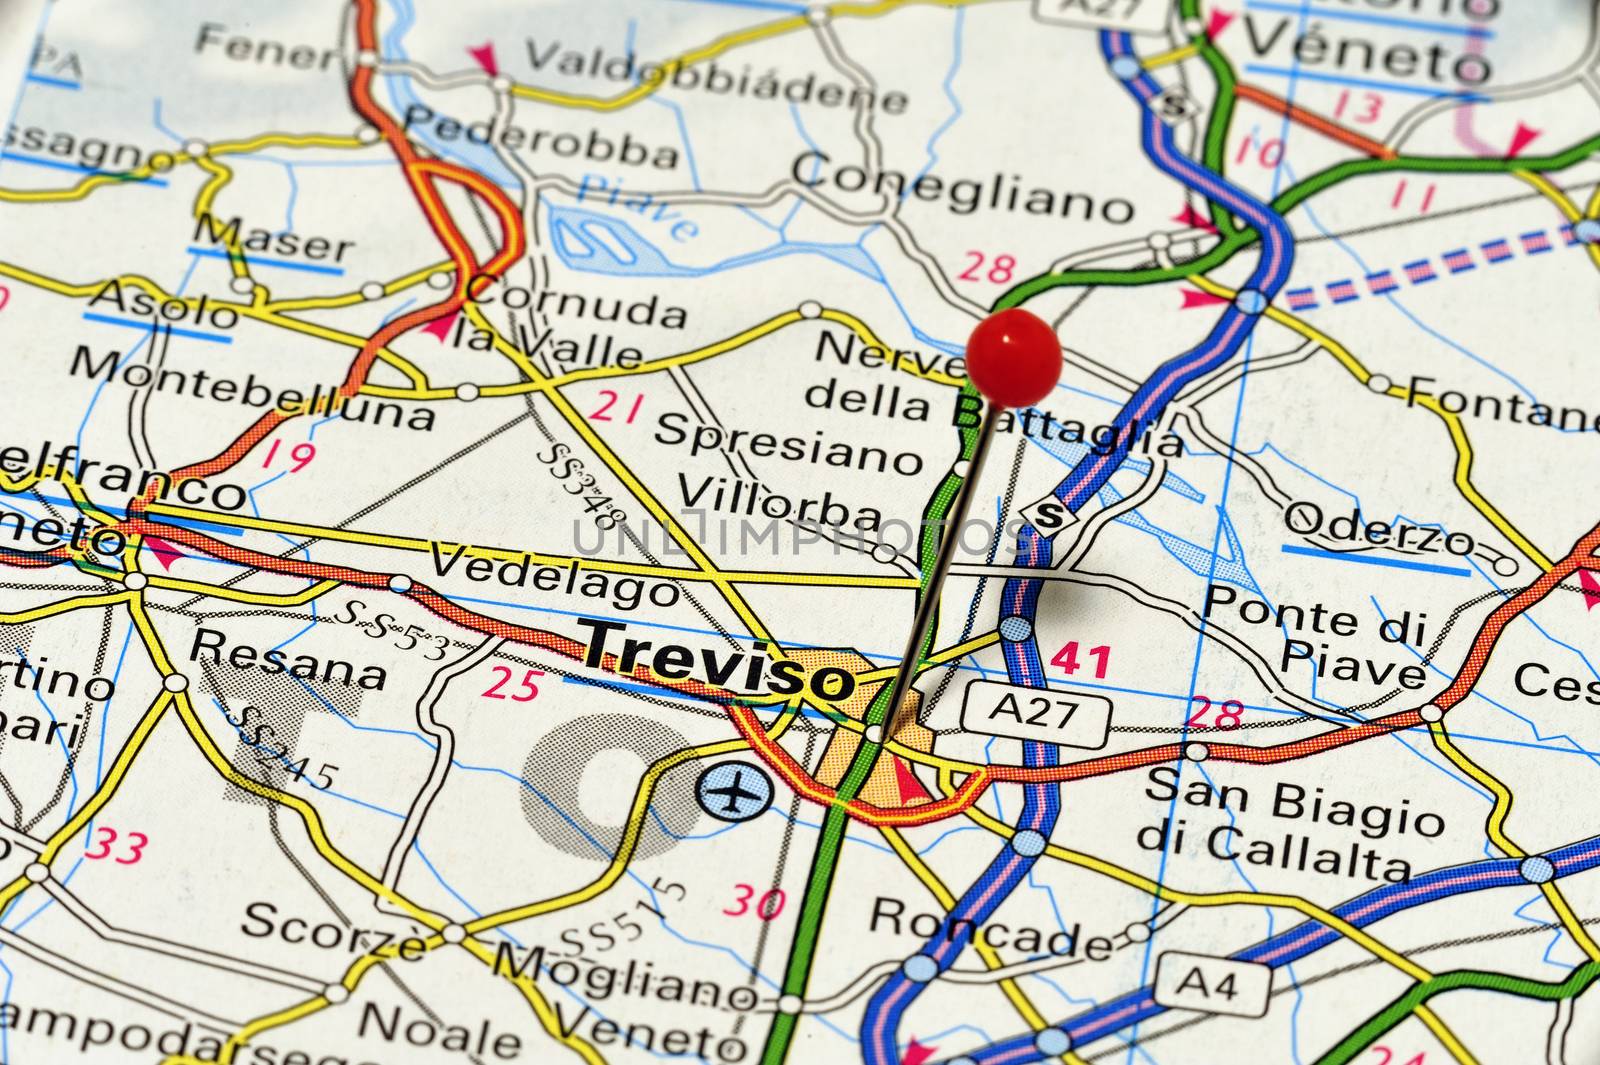 European cities on map series: Treviso